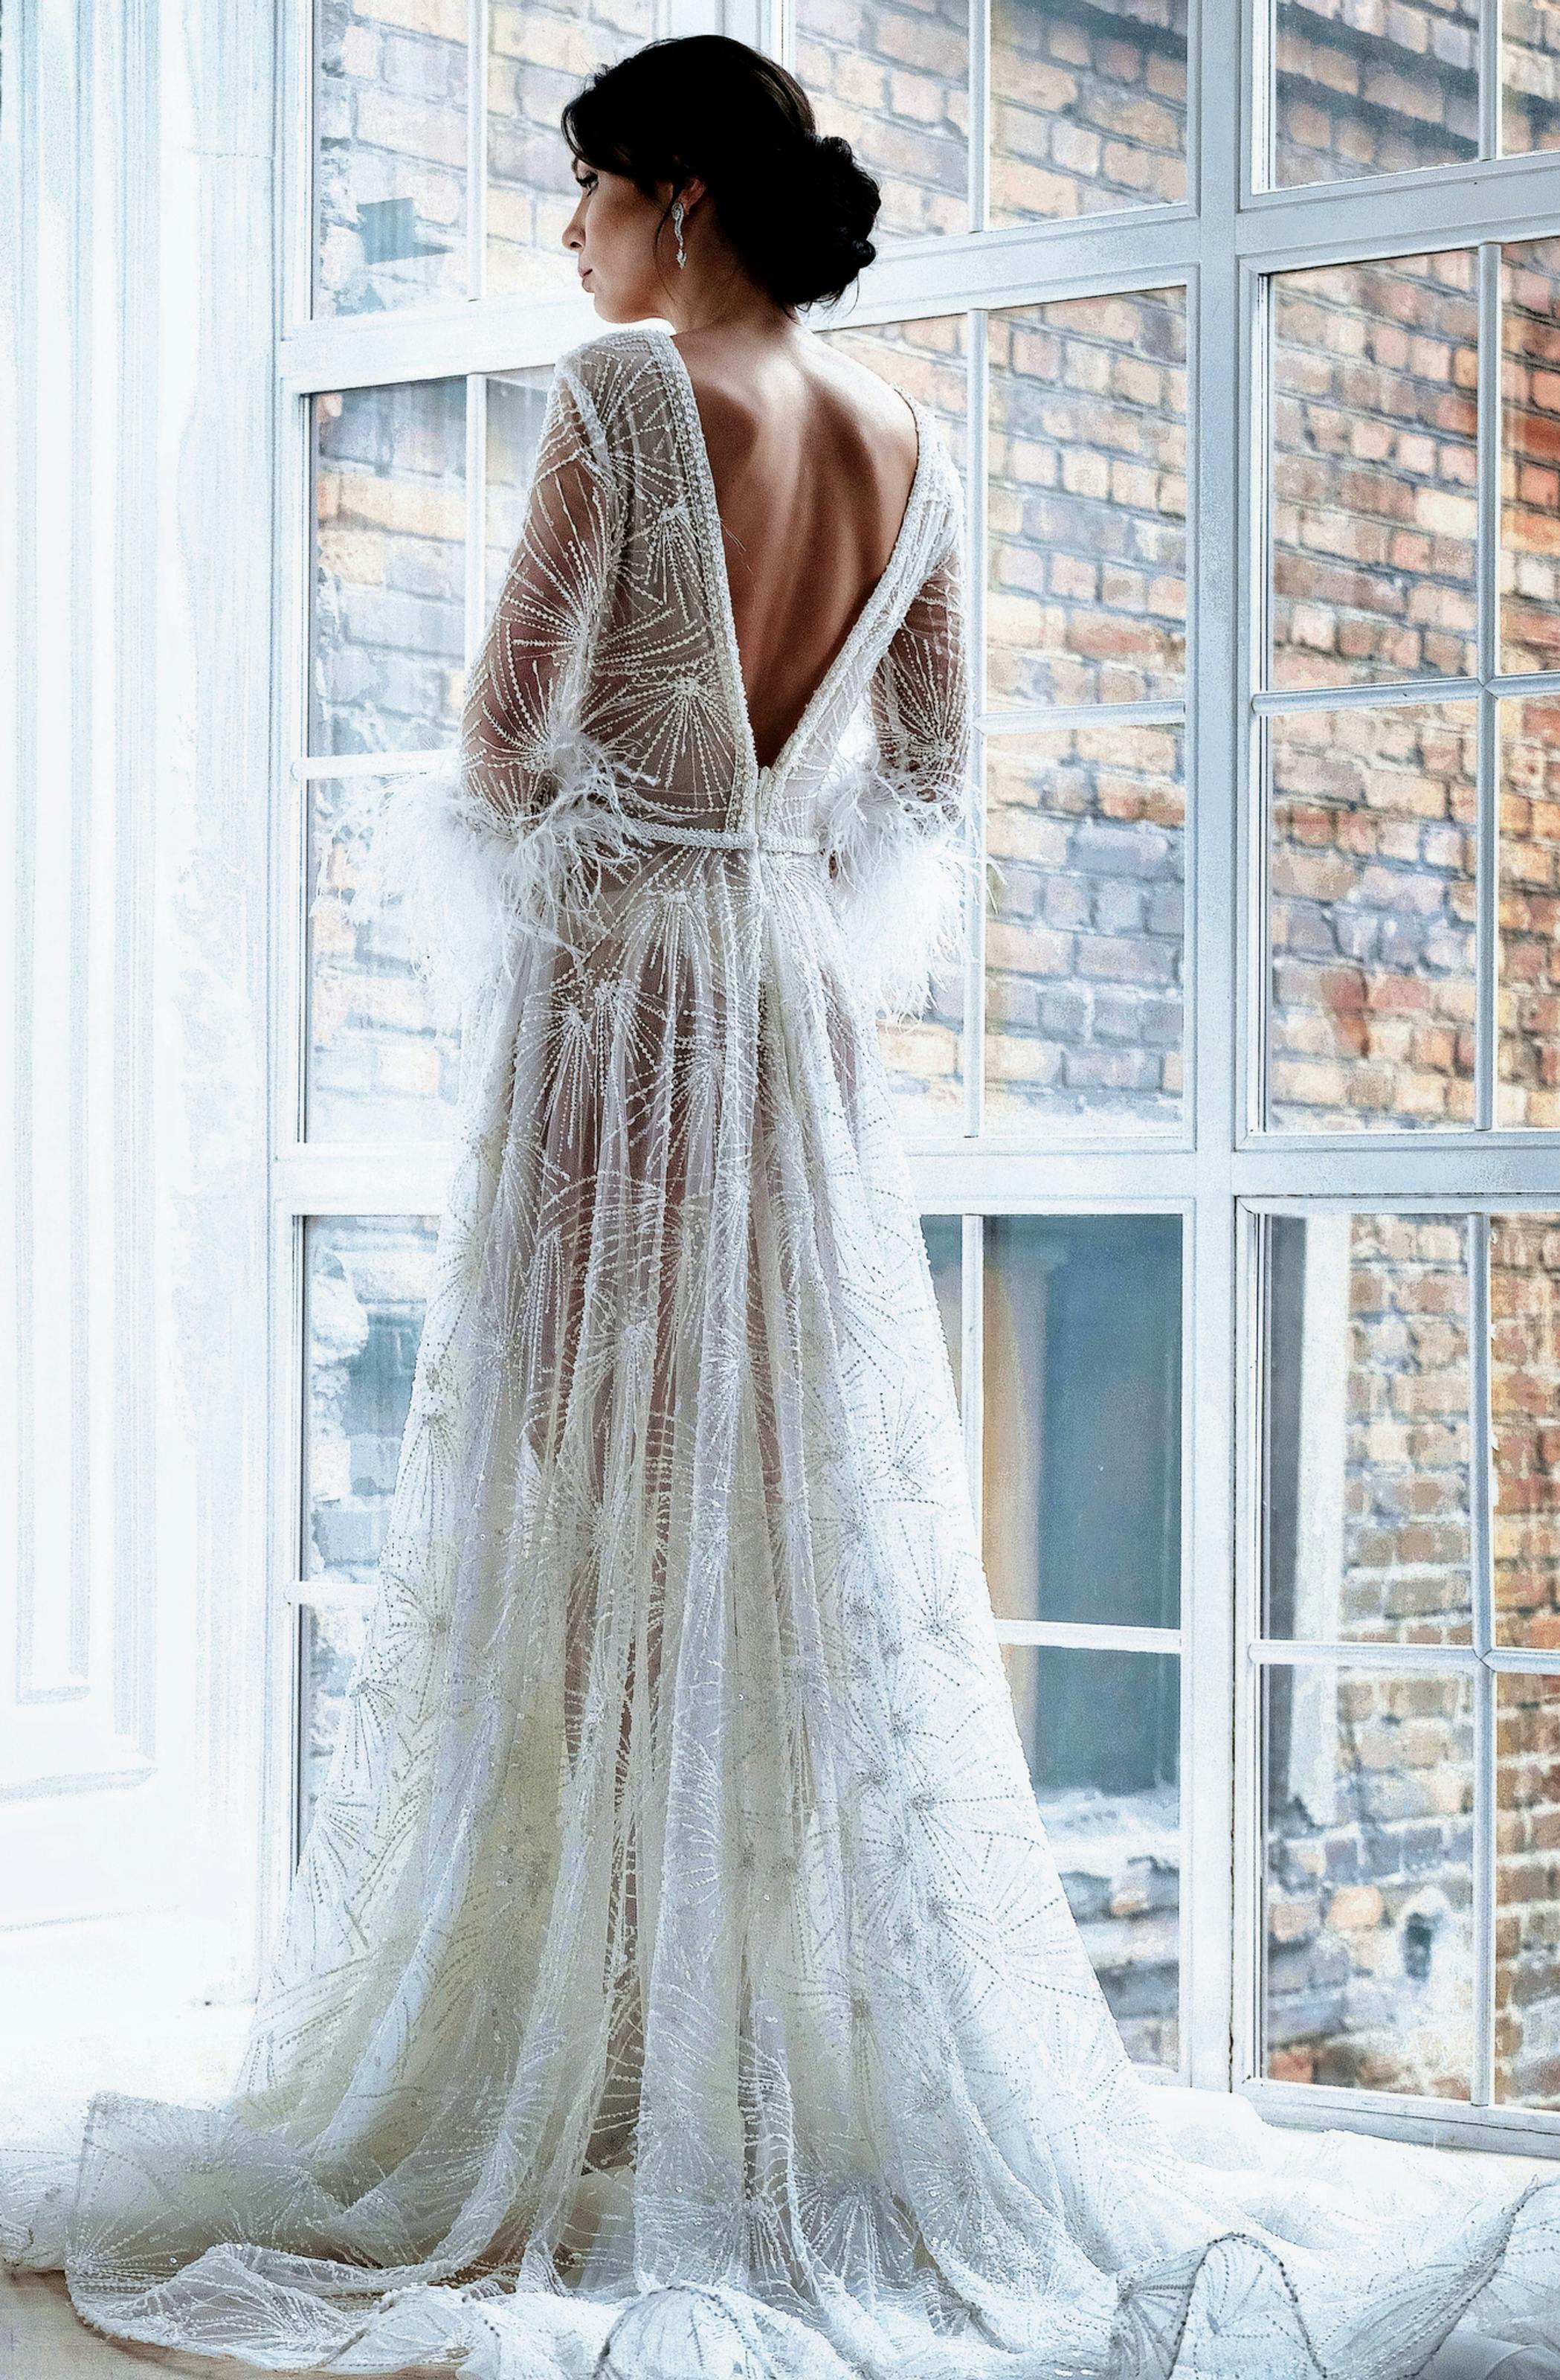 A bride in a wedding dress | Source: Pexels